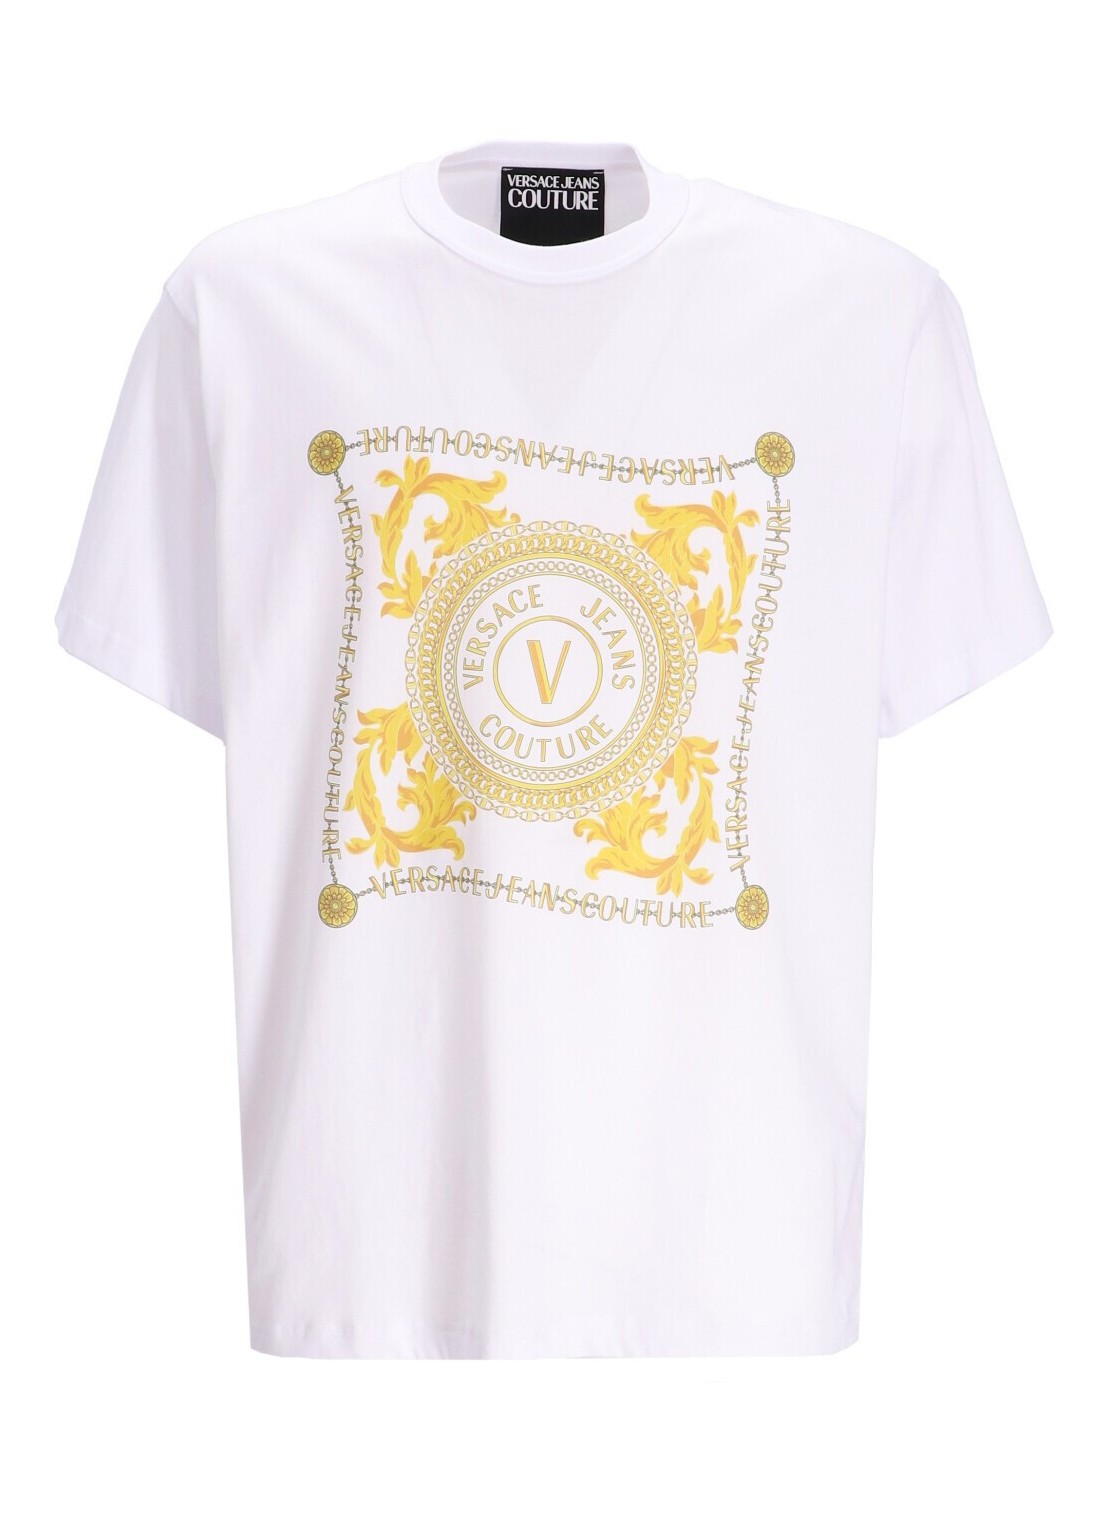 Camiseta versace t-shirt man 75up601 r foulard 75gahf07 g03 talla M
 